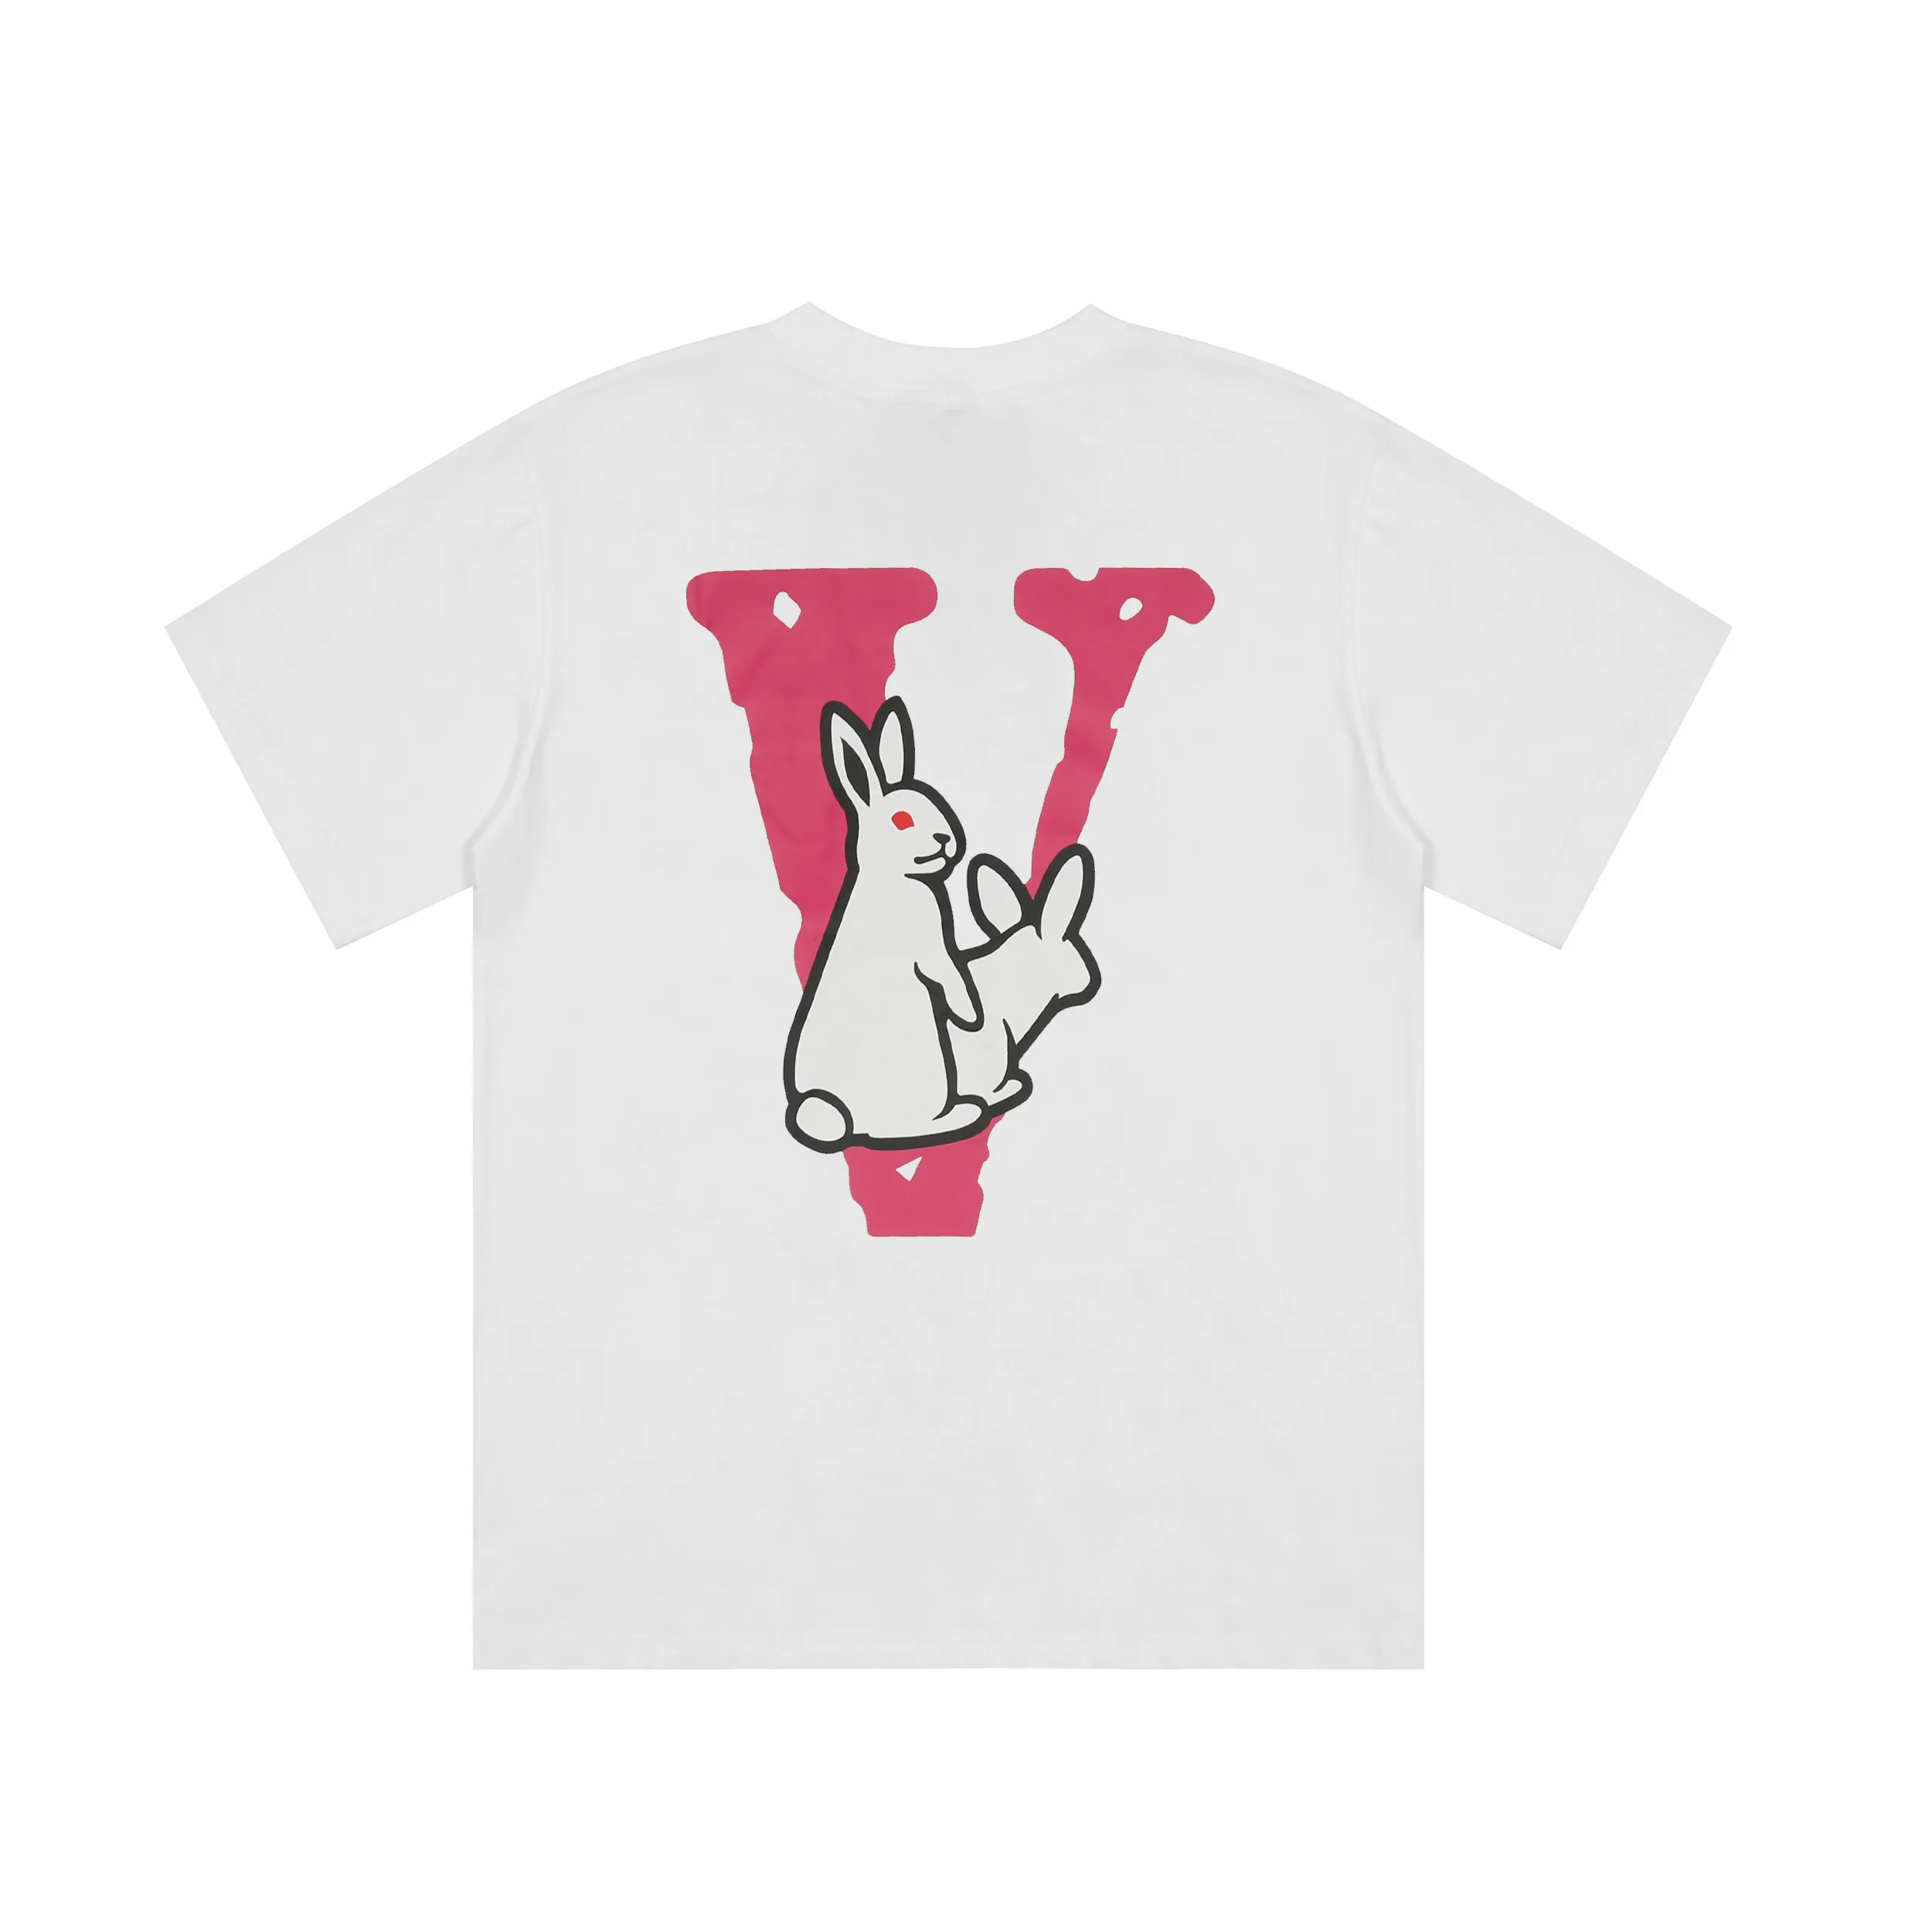 Vlone T-shirt Big "V" Tshirt Men's / Women's Couples Casual Fashion Trend High Street Loose Hip-Hop100% Cotton Printed Round Neck Shirt US Size S-XL 6141